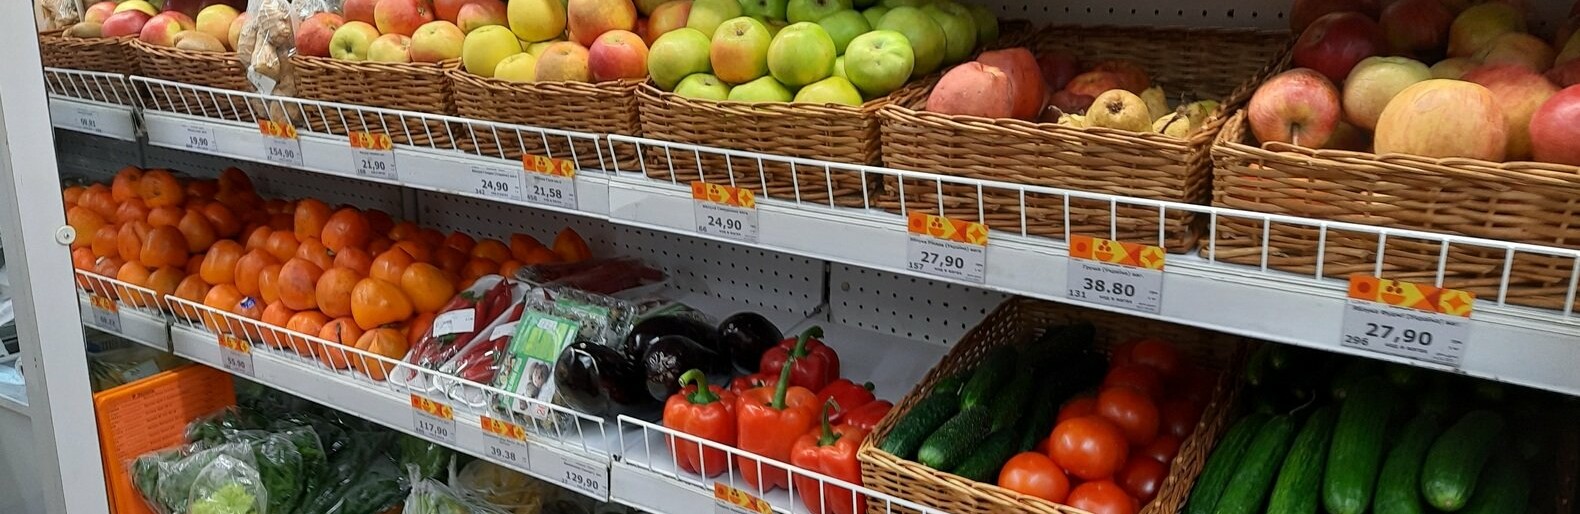 Цены на брокколи, имбирь, мандарины и яблоки: супермаркеты Одессы, - ФОТО